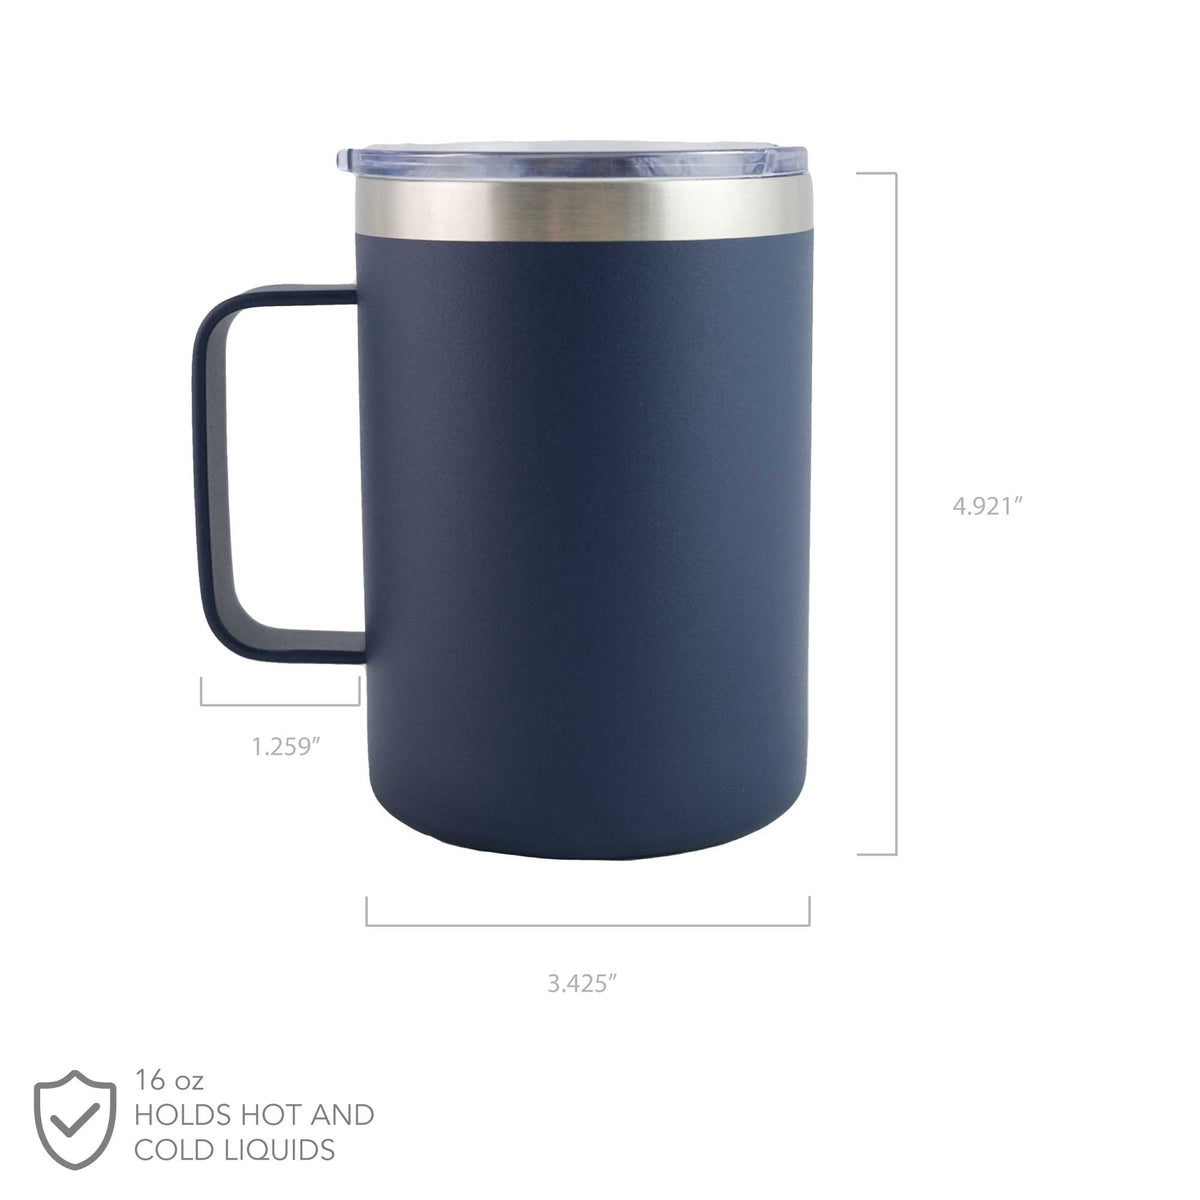 Custom Engraved 16oz Stainless Steel Mug, Design: CUSTOM - Everything Etched